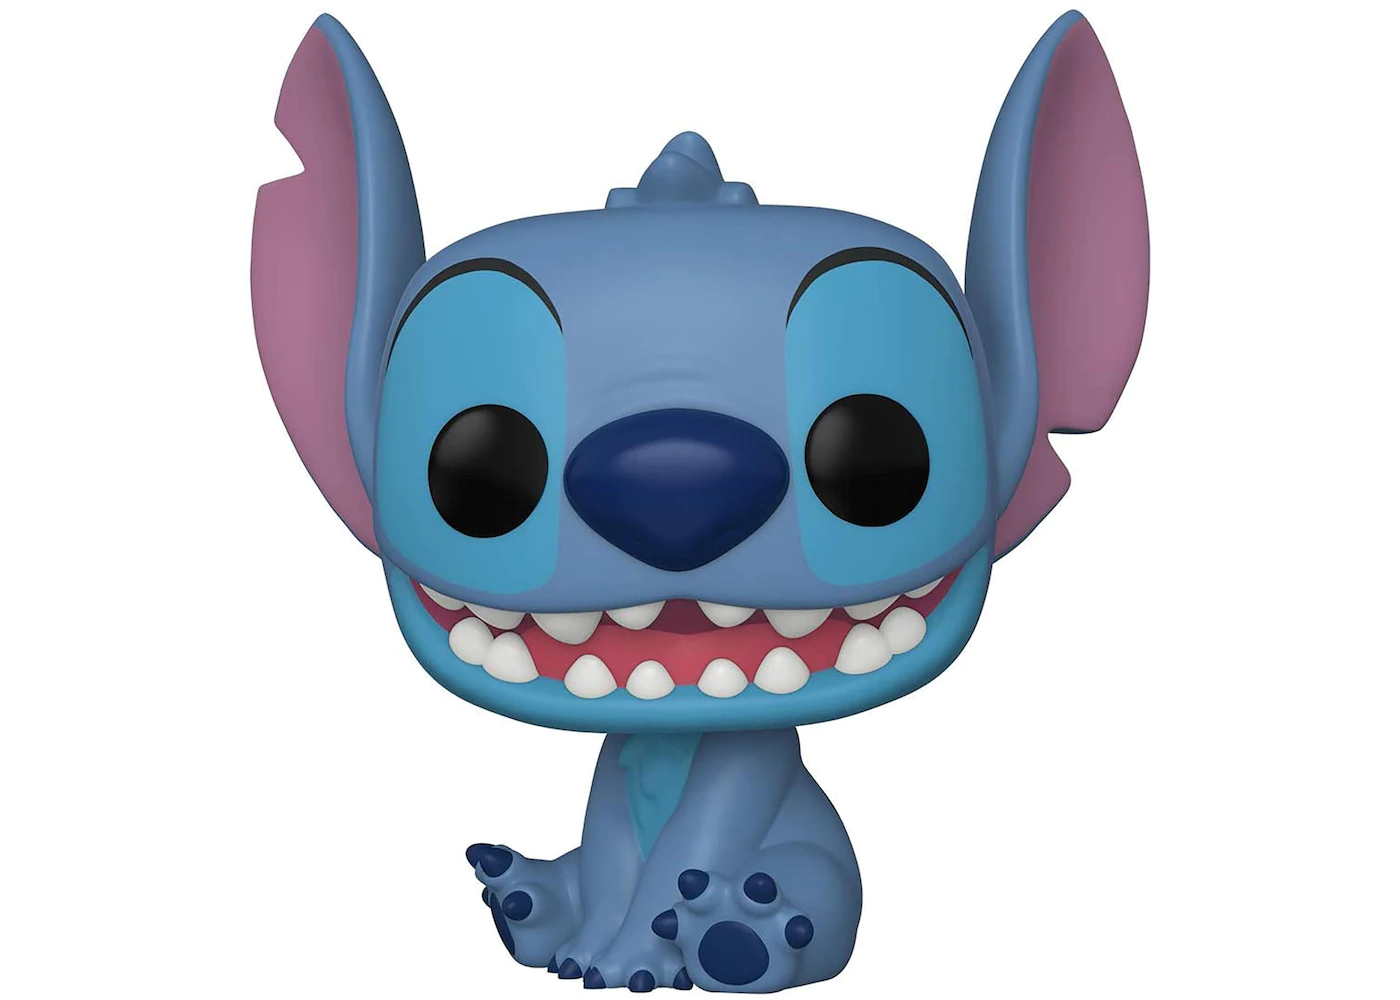 Funko Pop! Disney Lilo & Stitch Stitch 10 Inch Figure #1046 - US